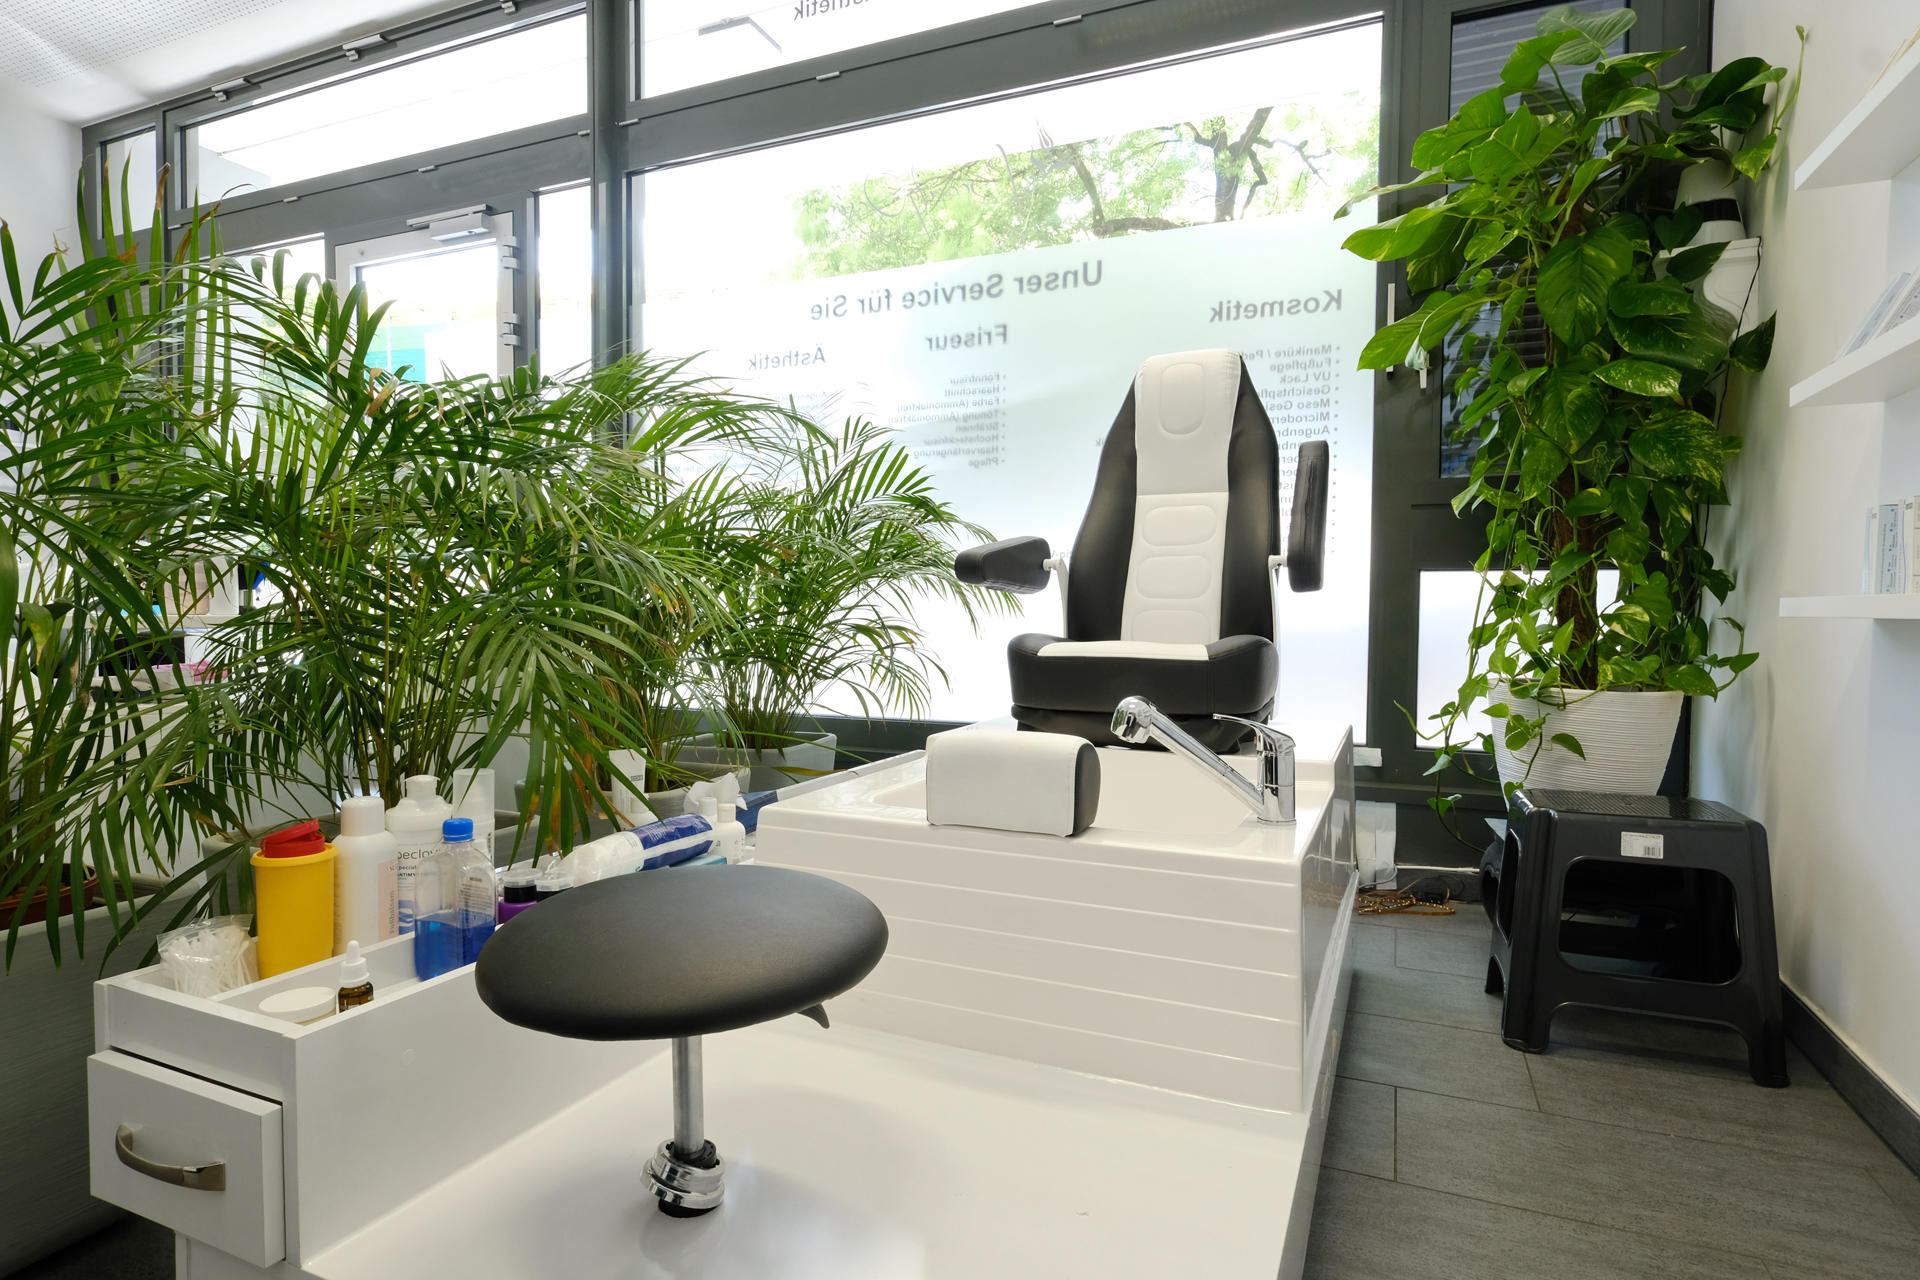 Friseursalon | Friseur und Kosmetikstudio Beauty Oasis | München, Heiglhofstr. 9 in München